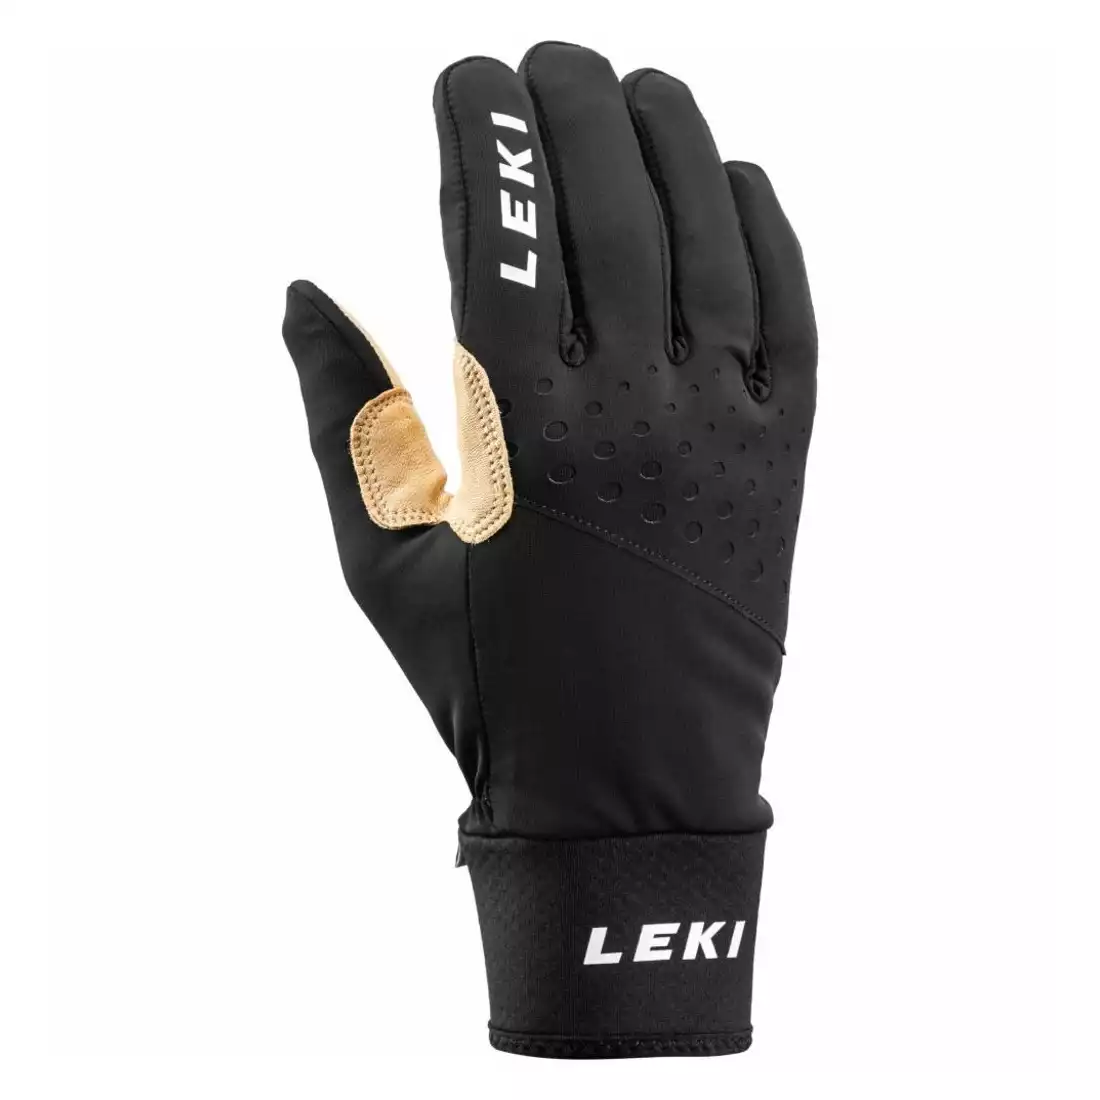 LEKI Nordic Race Premium zimné rukavice, čierna a béžová